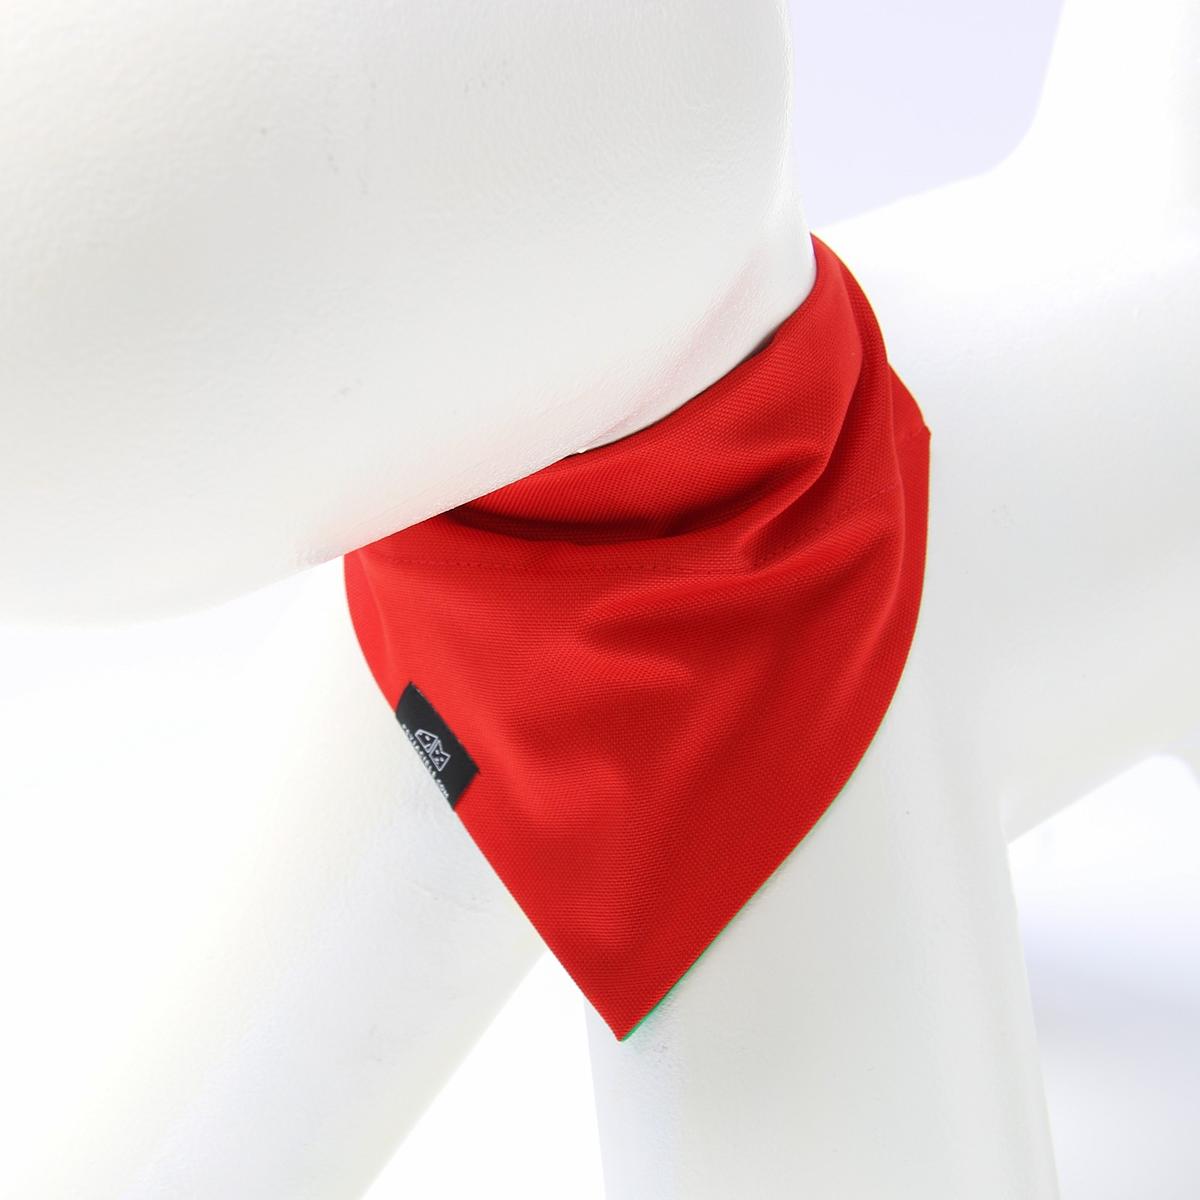 Bandana "Red as a beet" collar